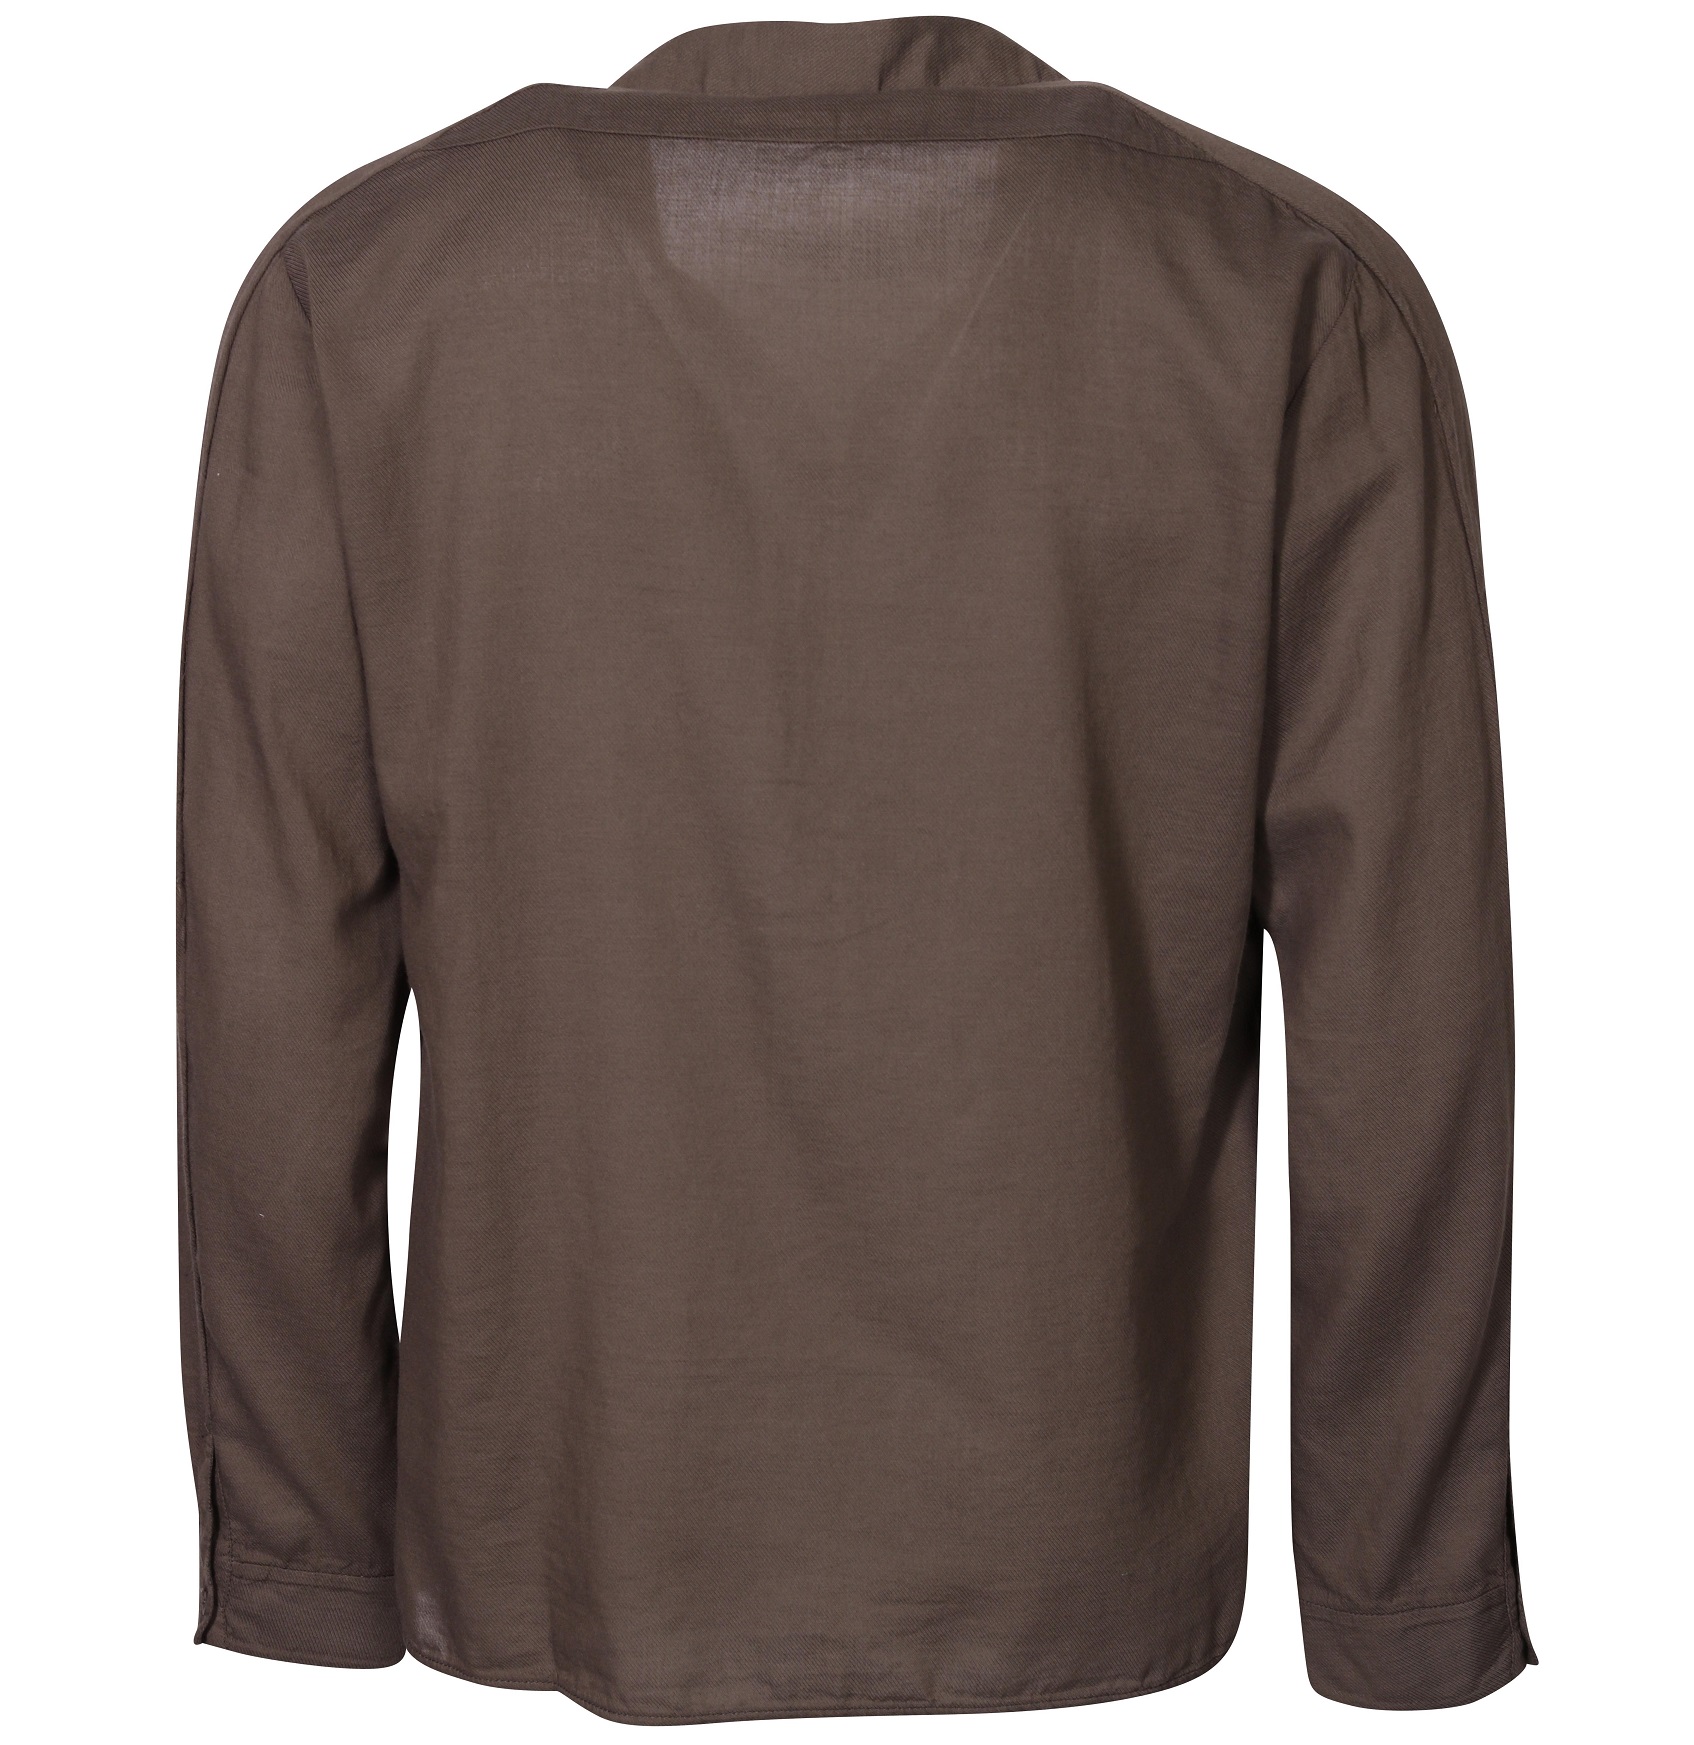 TRANSIT UOMO Super Soft Shirt in Brown Olive